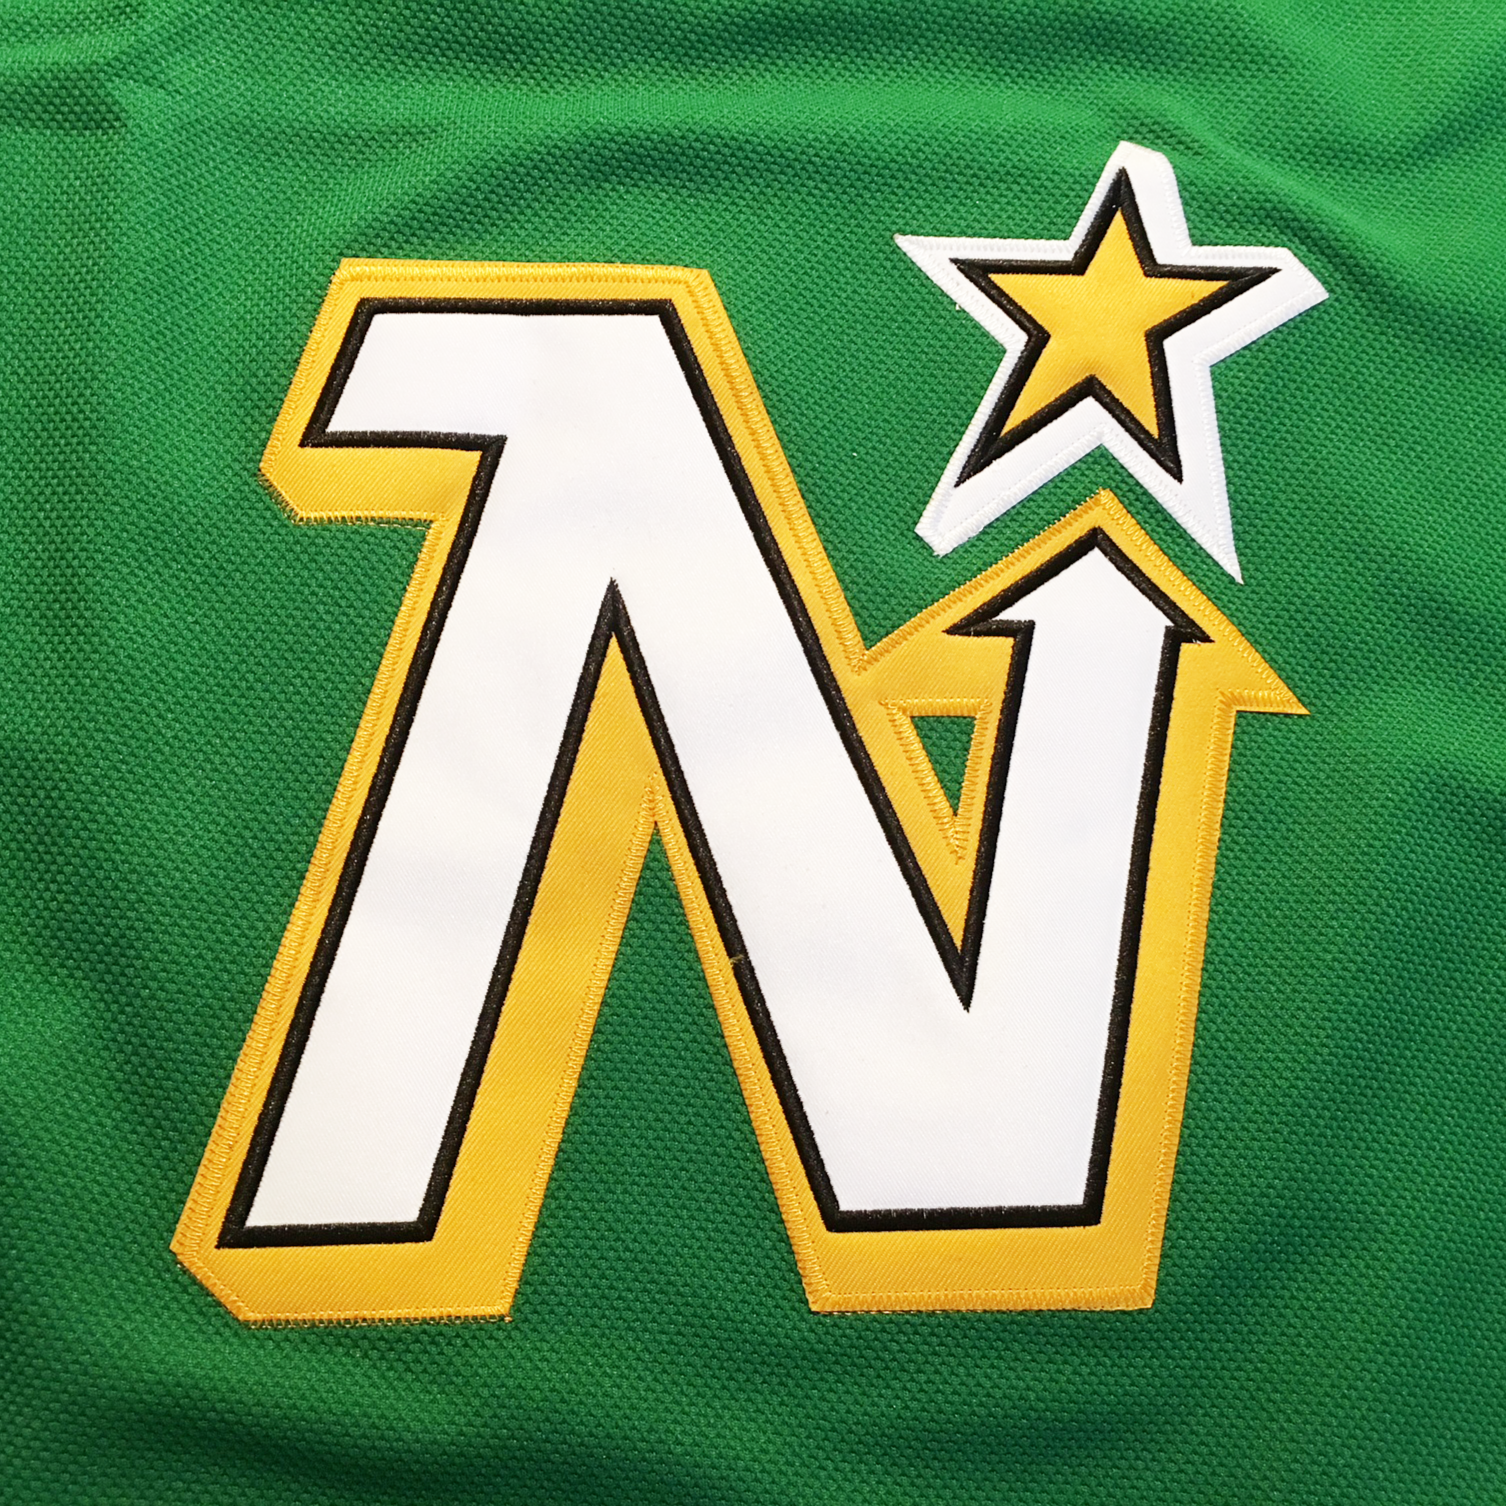 North Stars - The Minnesotan